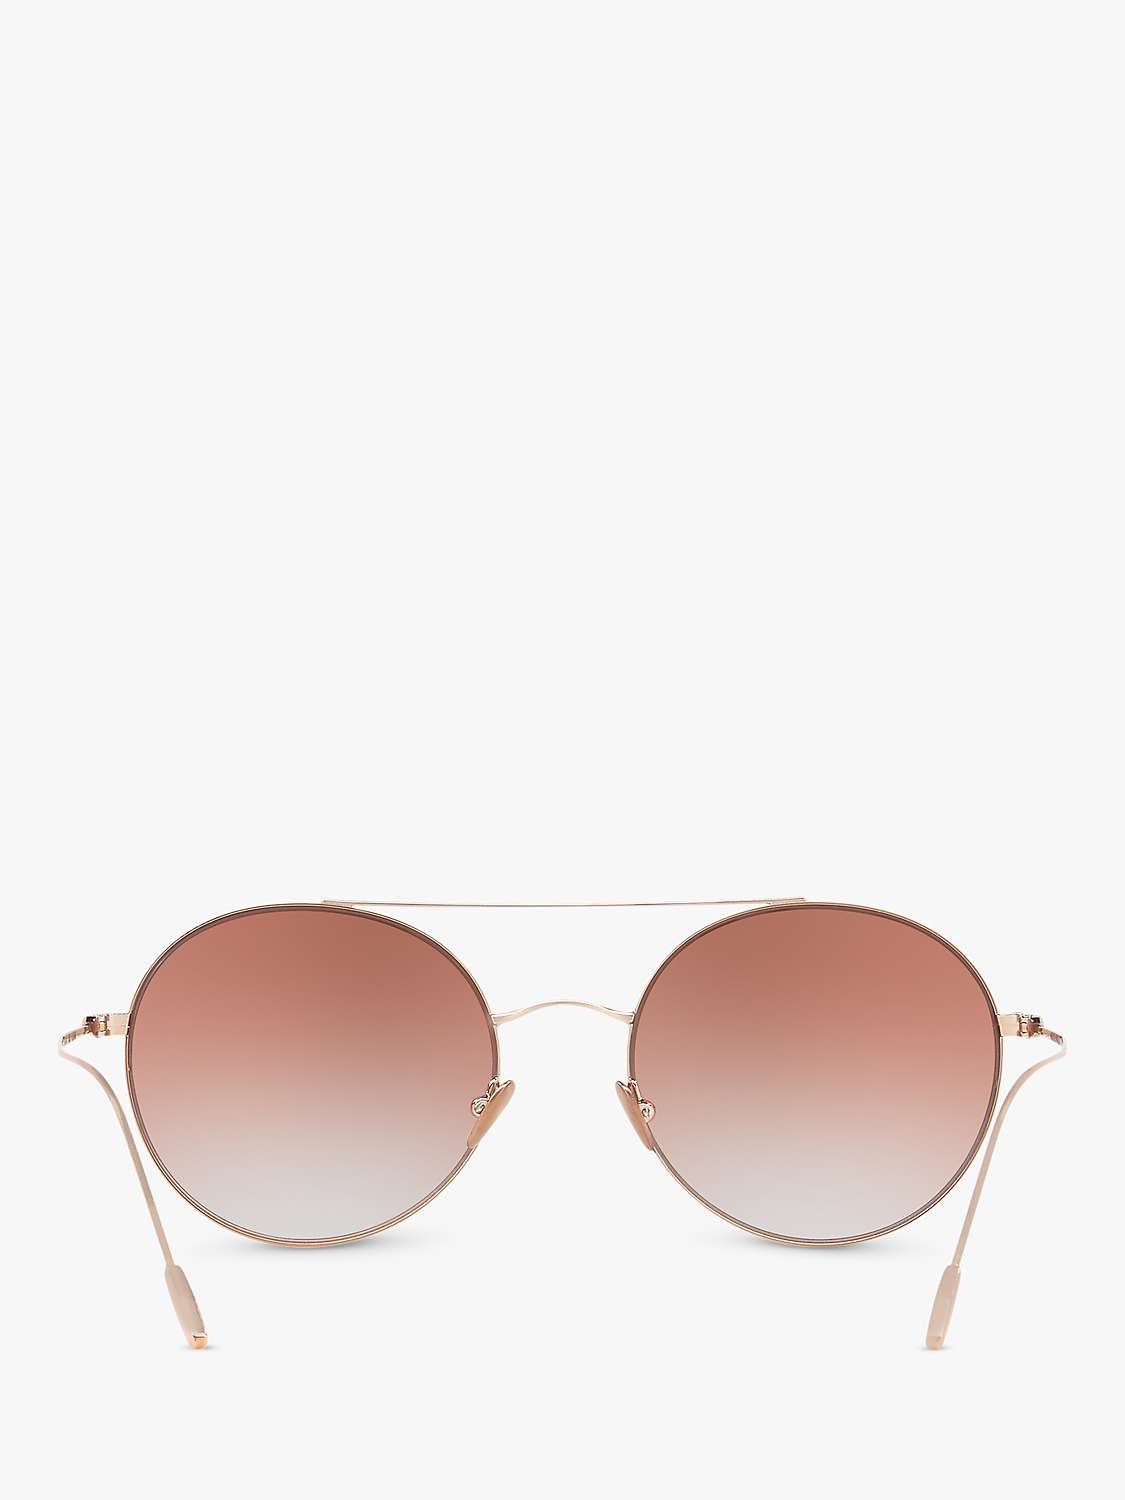 Buy Giorgio Armani AR6050 Women's Round Sunglasses, Bronze/Mirror Pink Online at johnlewis.com